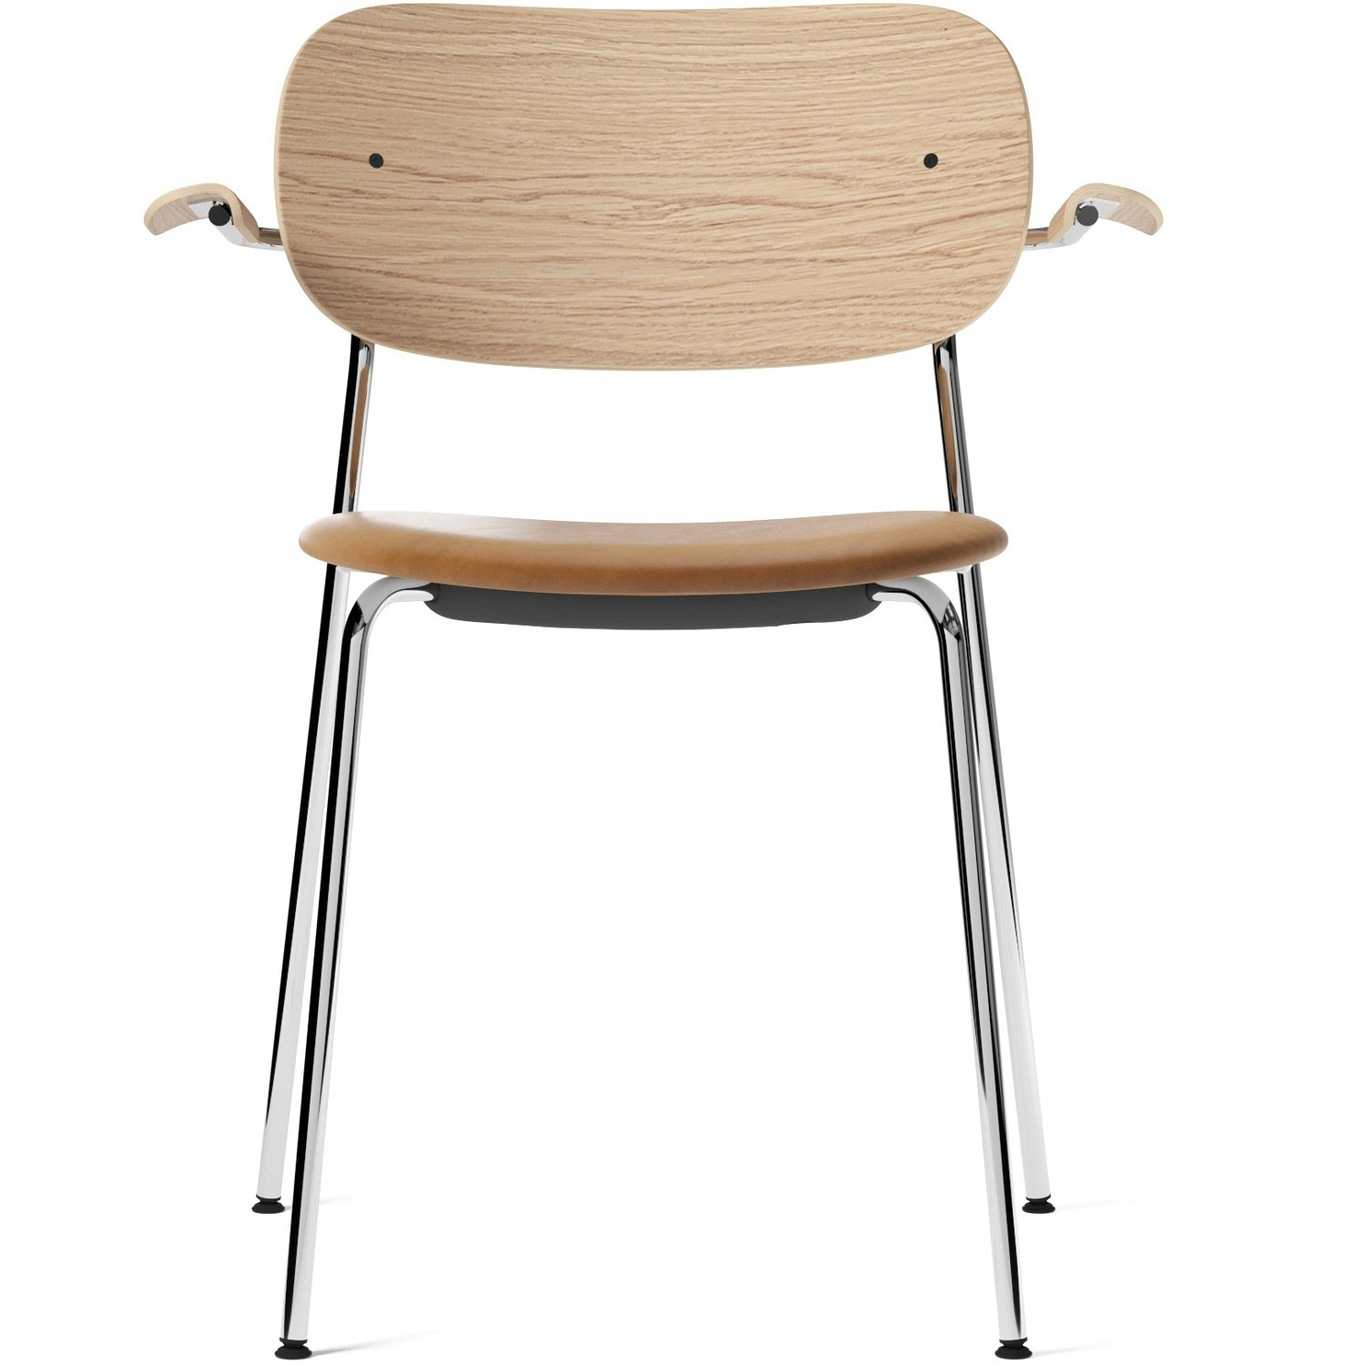 Co Chair Chromed Legs, Seat Dakar 0250 / Back+Arm Natural Oak